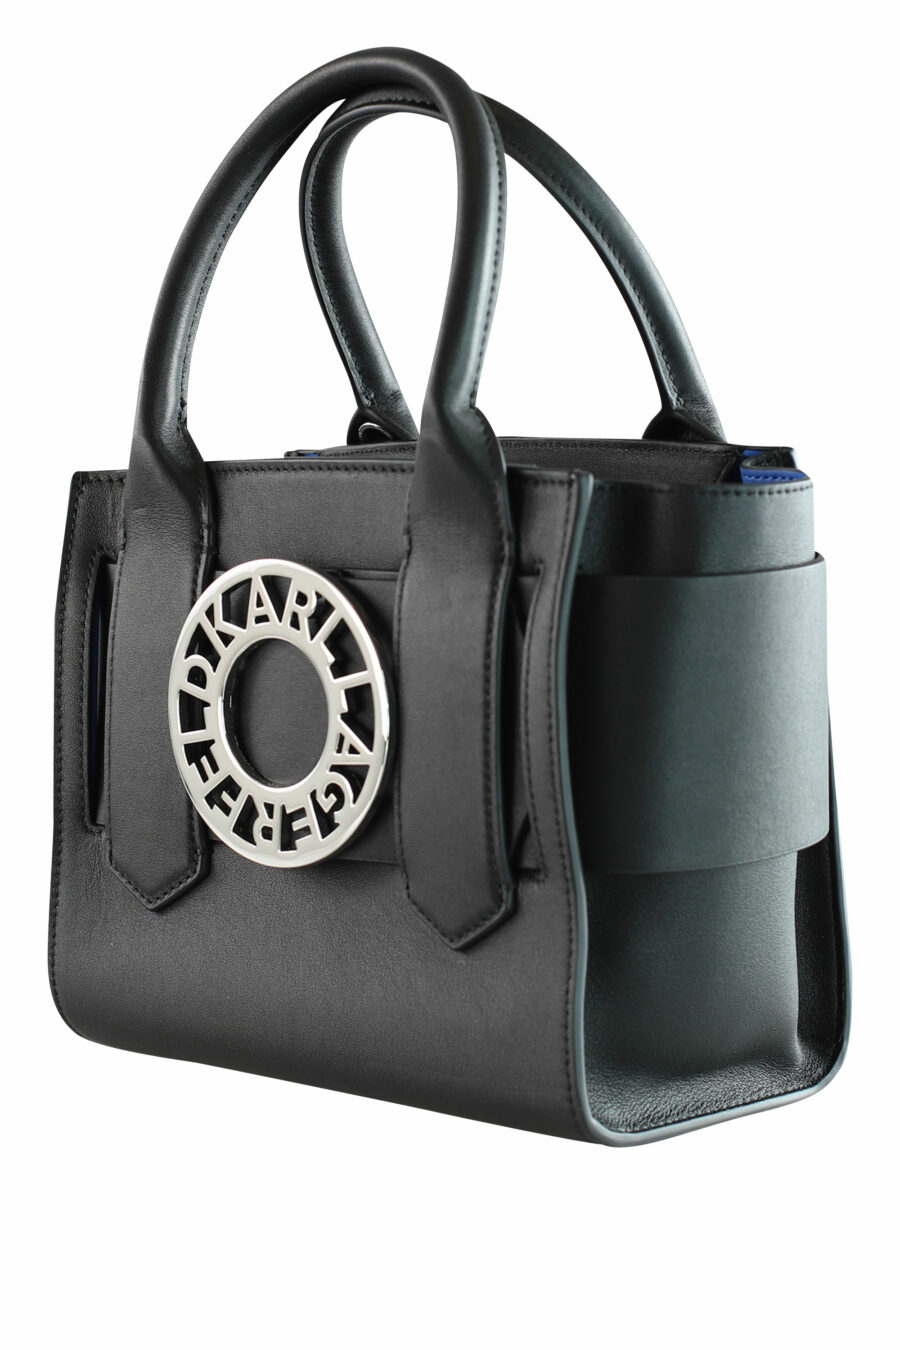 Tote bag mini negro con logo "k/disk" - 8720744103363 2